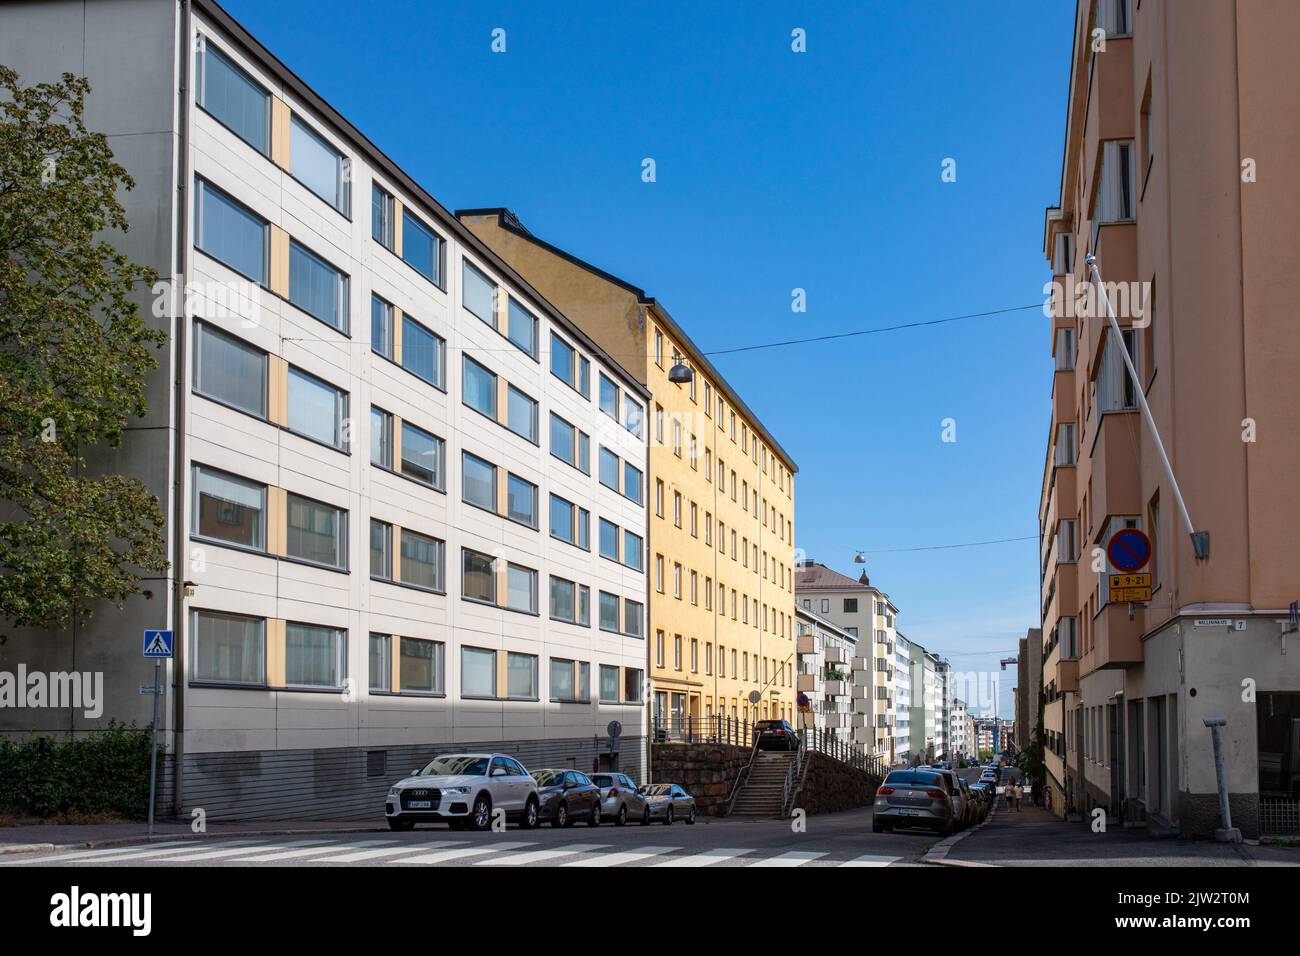 Kolmas linja Street view in Kallio District of Helsinki, Finland Stockfoto